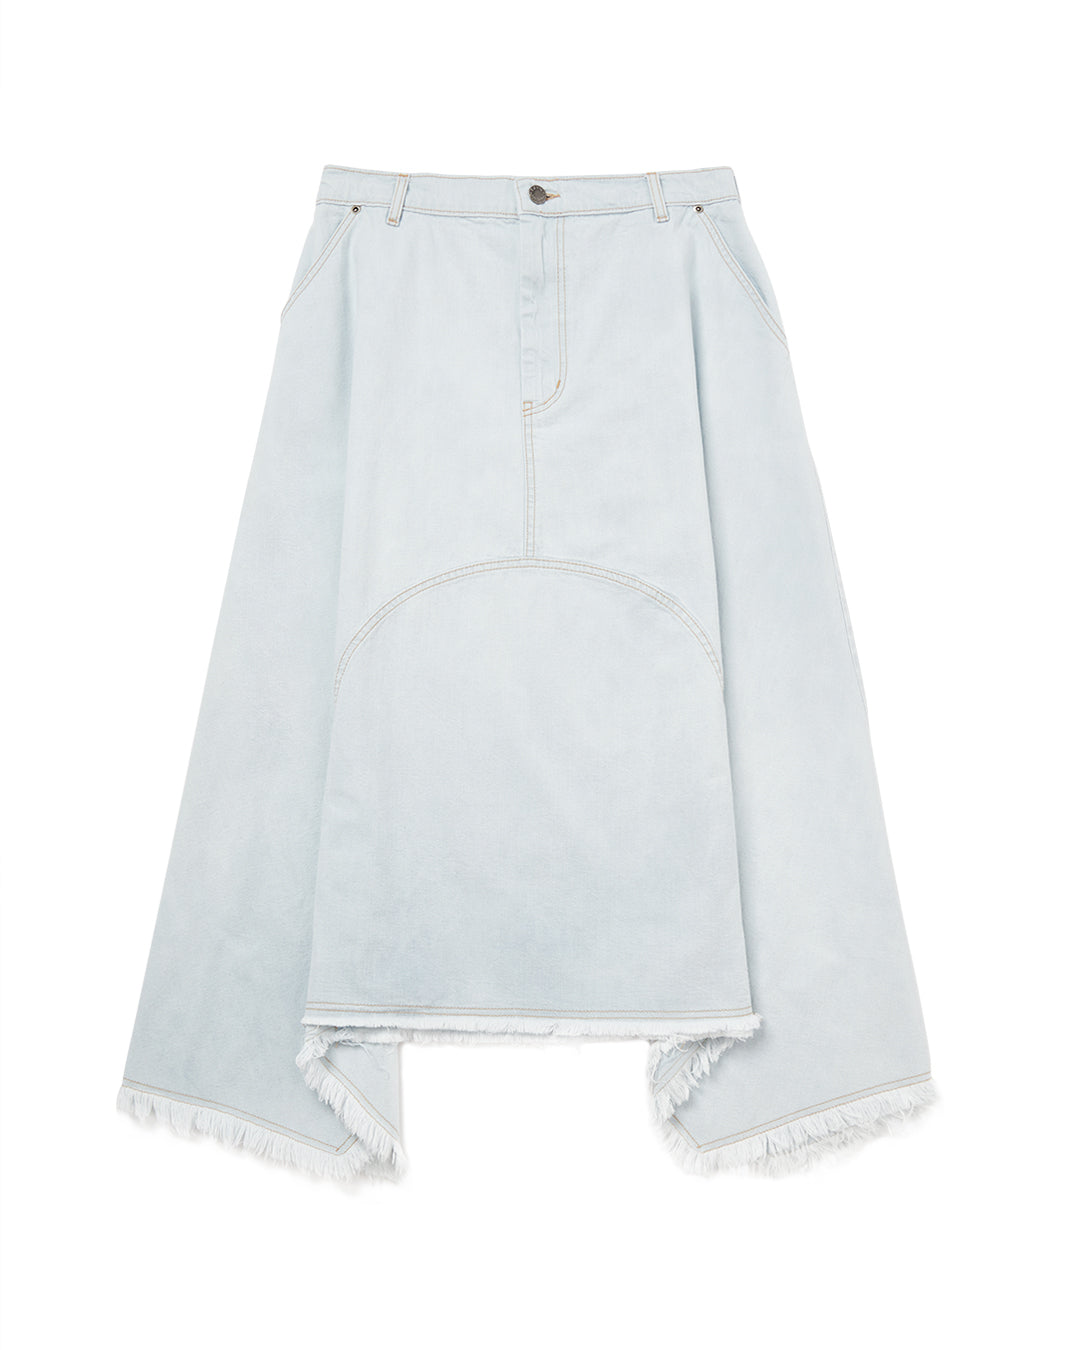 BRB- Mormon Rodeo Skirt - Error404store. Light blue wash denim skirt made by Australian independent designer, BRB. Sold in Melbourne clothing boutique called Error404store. 